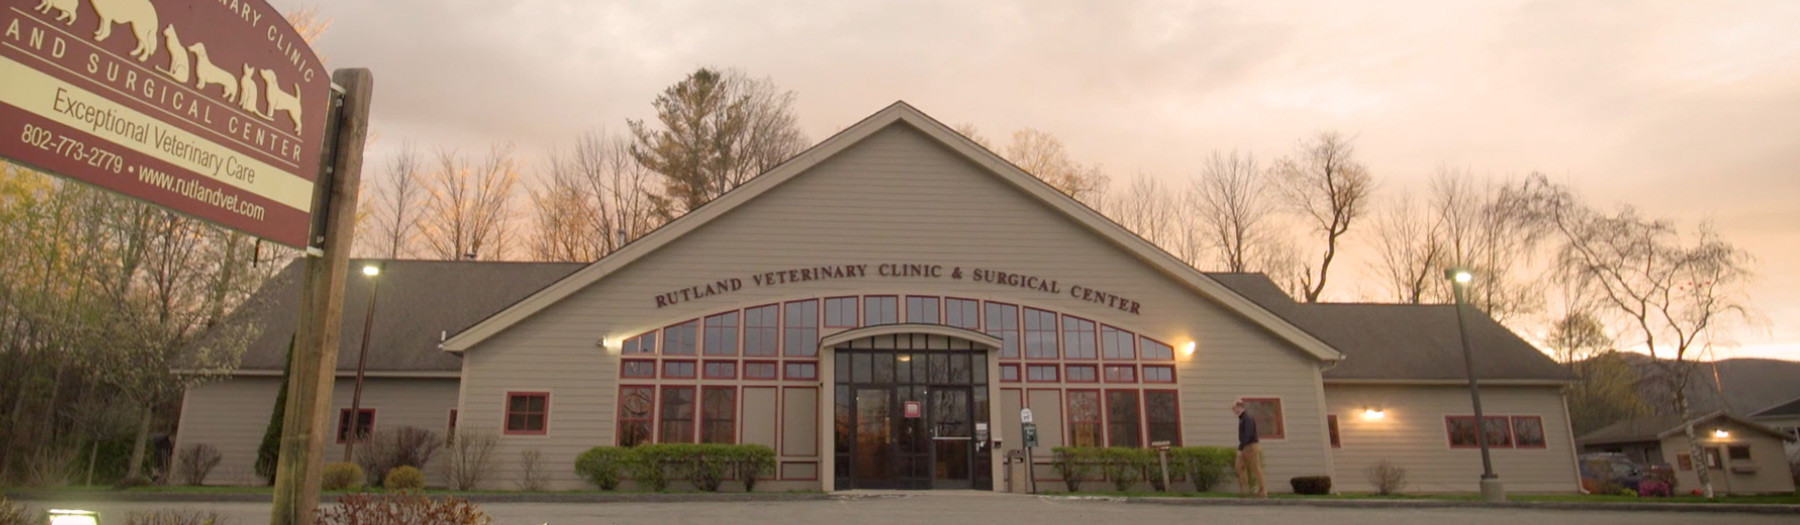 Rutland Veterinary Clinic & Surgical Center building exterior